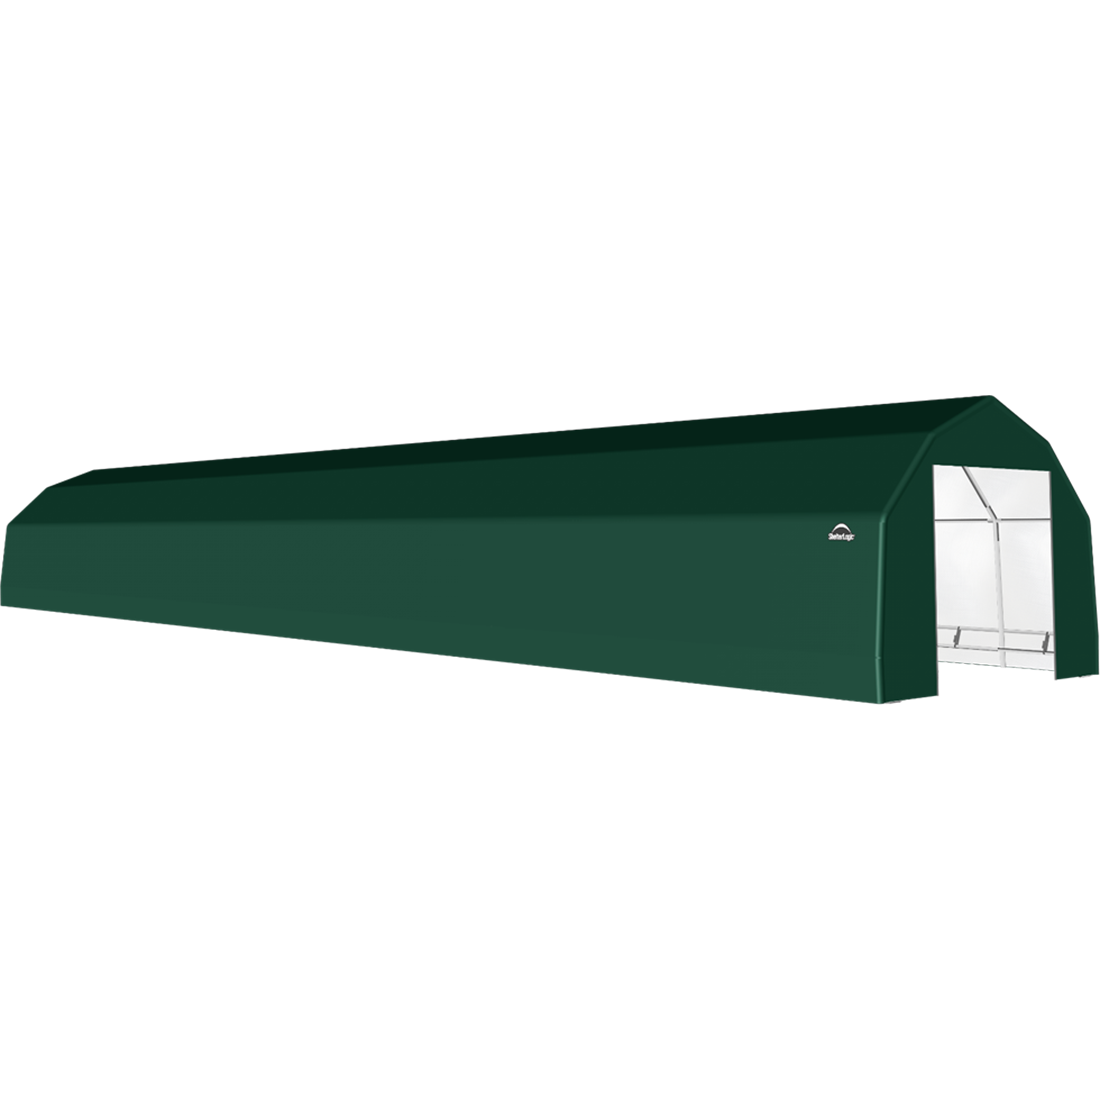 ShelterTech SP Series Barn Shelter, 15 ft. x 80 ft. x 11 ft. Heavy Duty PVC 14.5 oz. Green